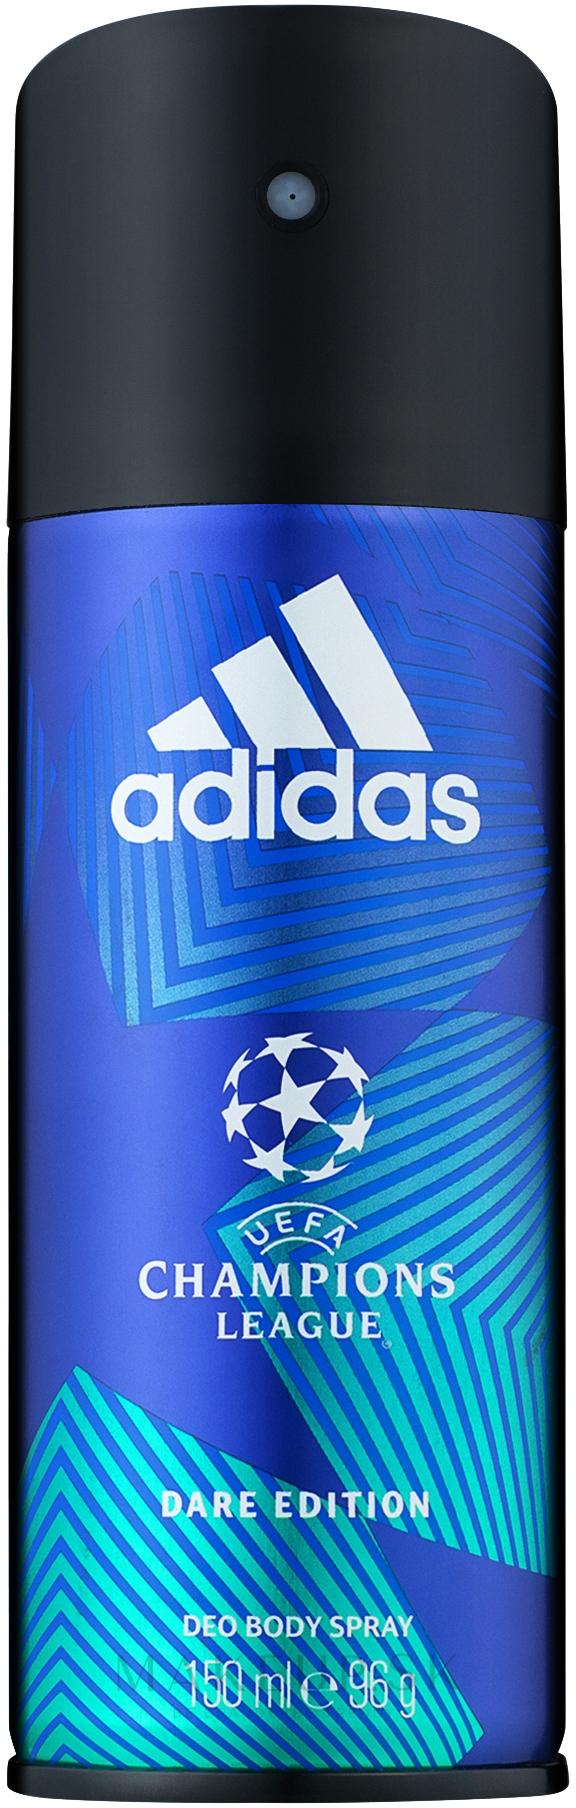 Adidas UEFA сhampions league dare edition